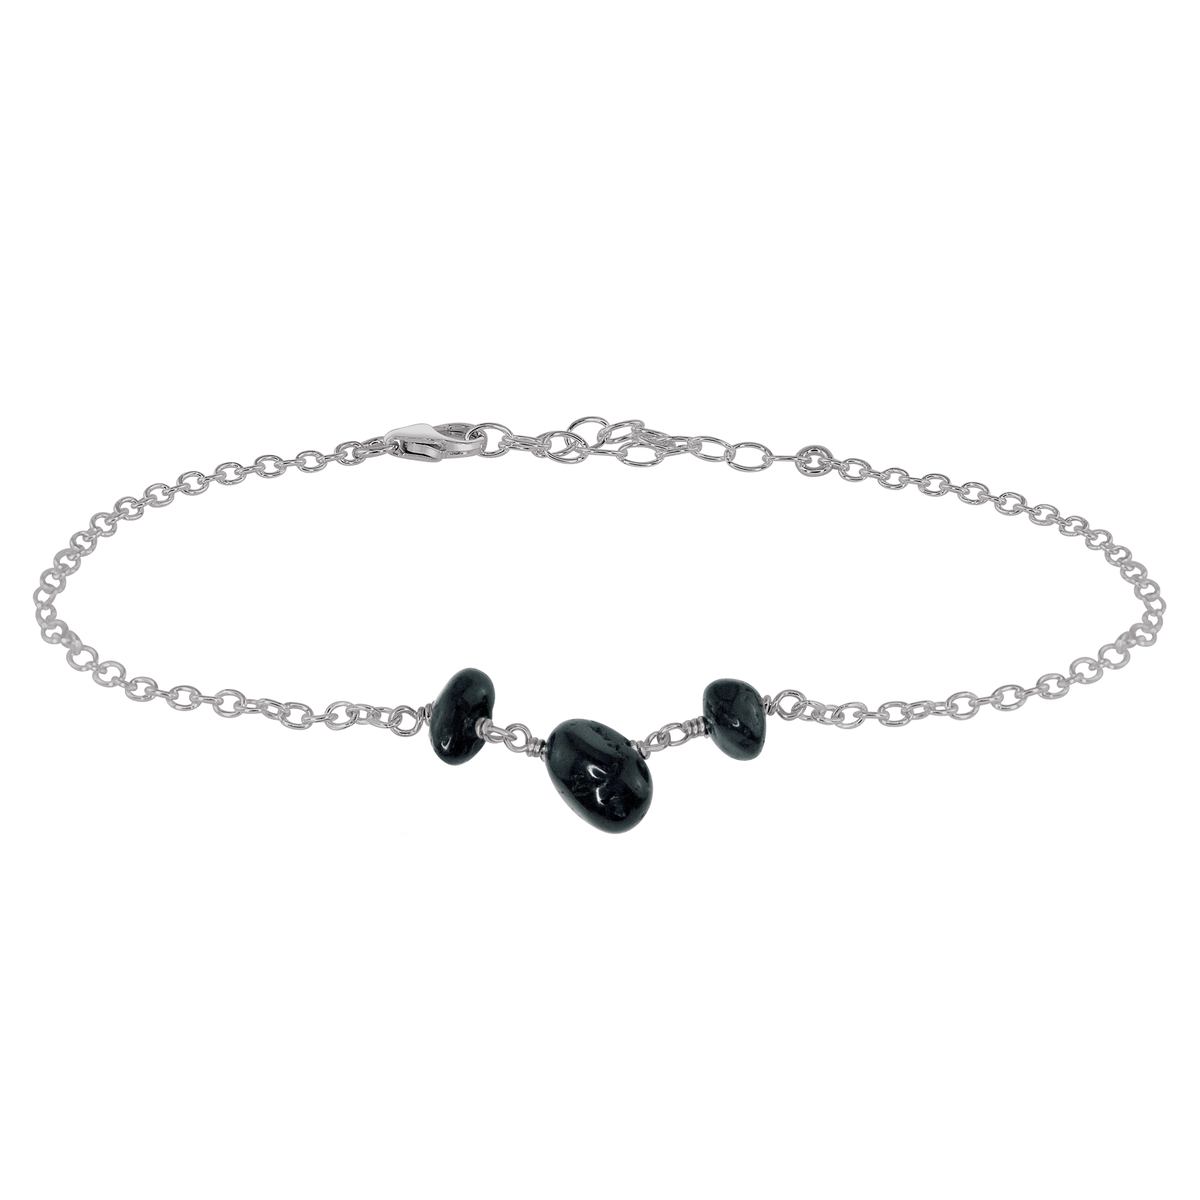 Beaded Chain Anklet - Black Tourmaline - Stainless Steel - Luna Tide Handmade Jewellery